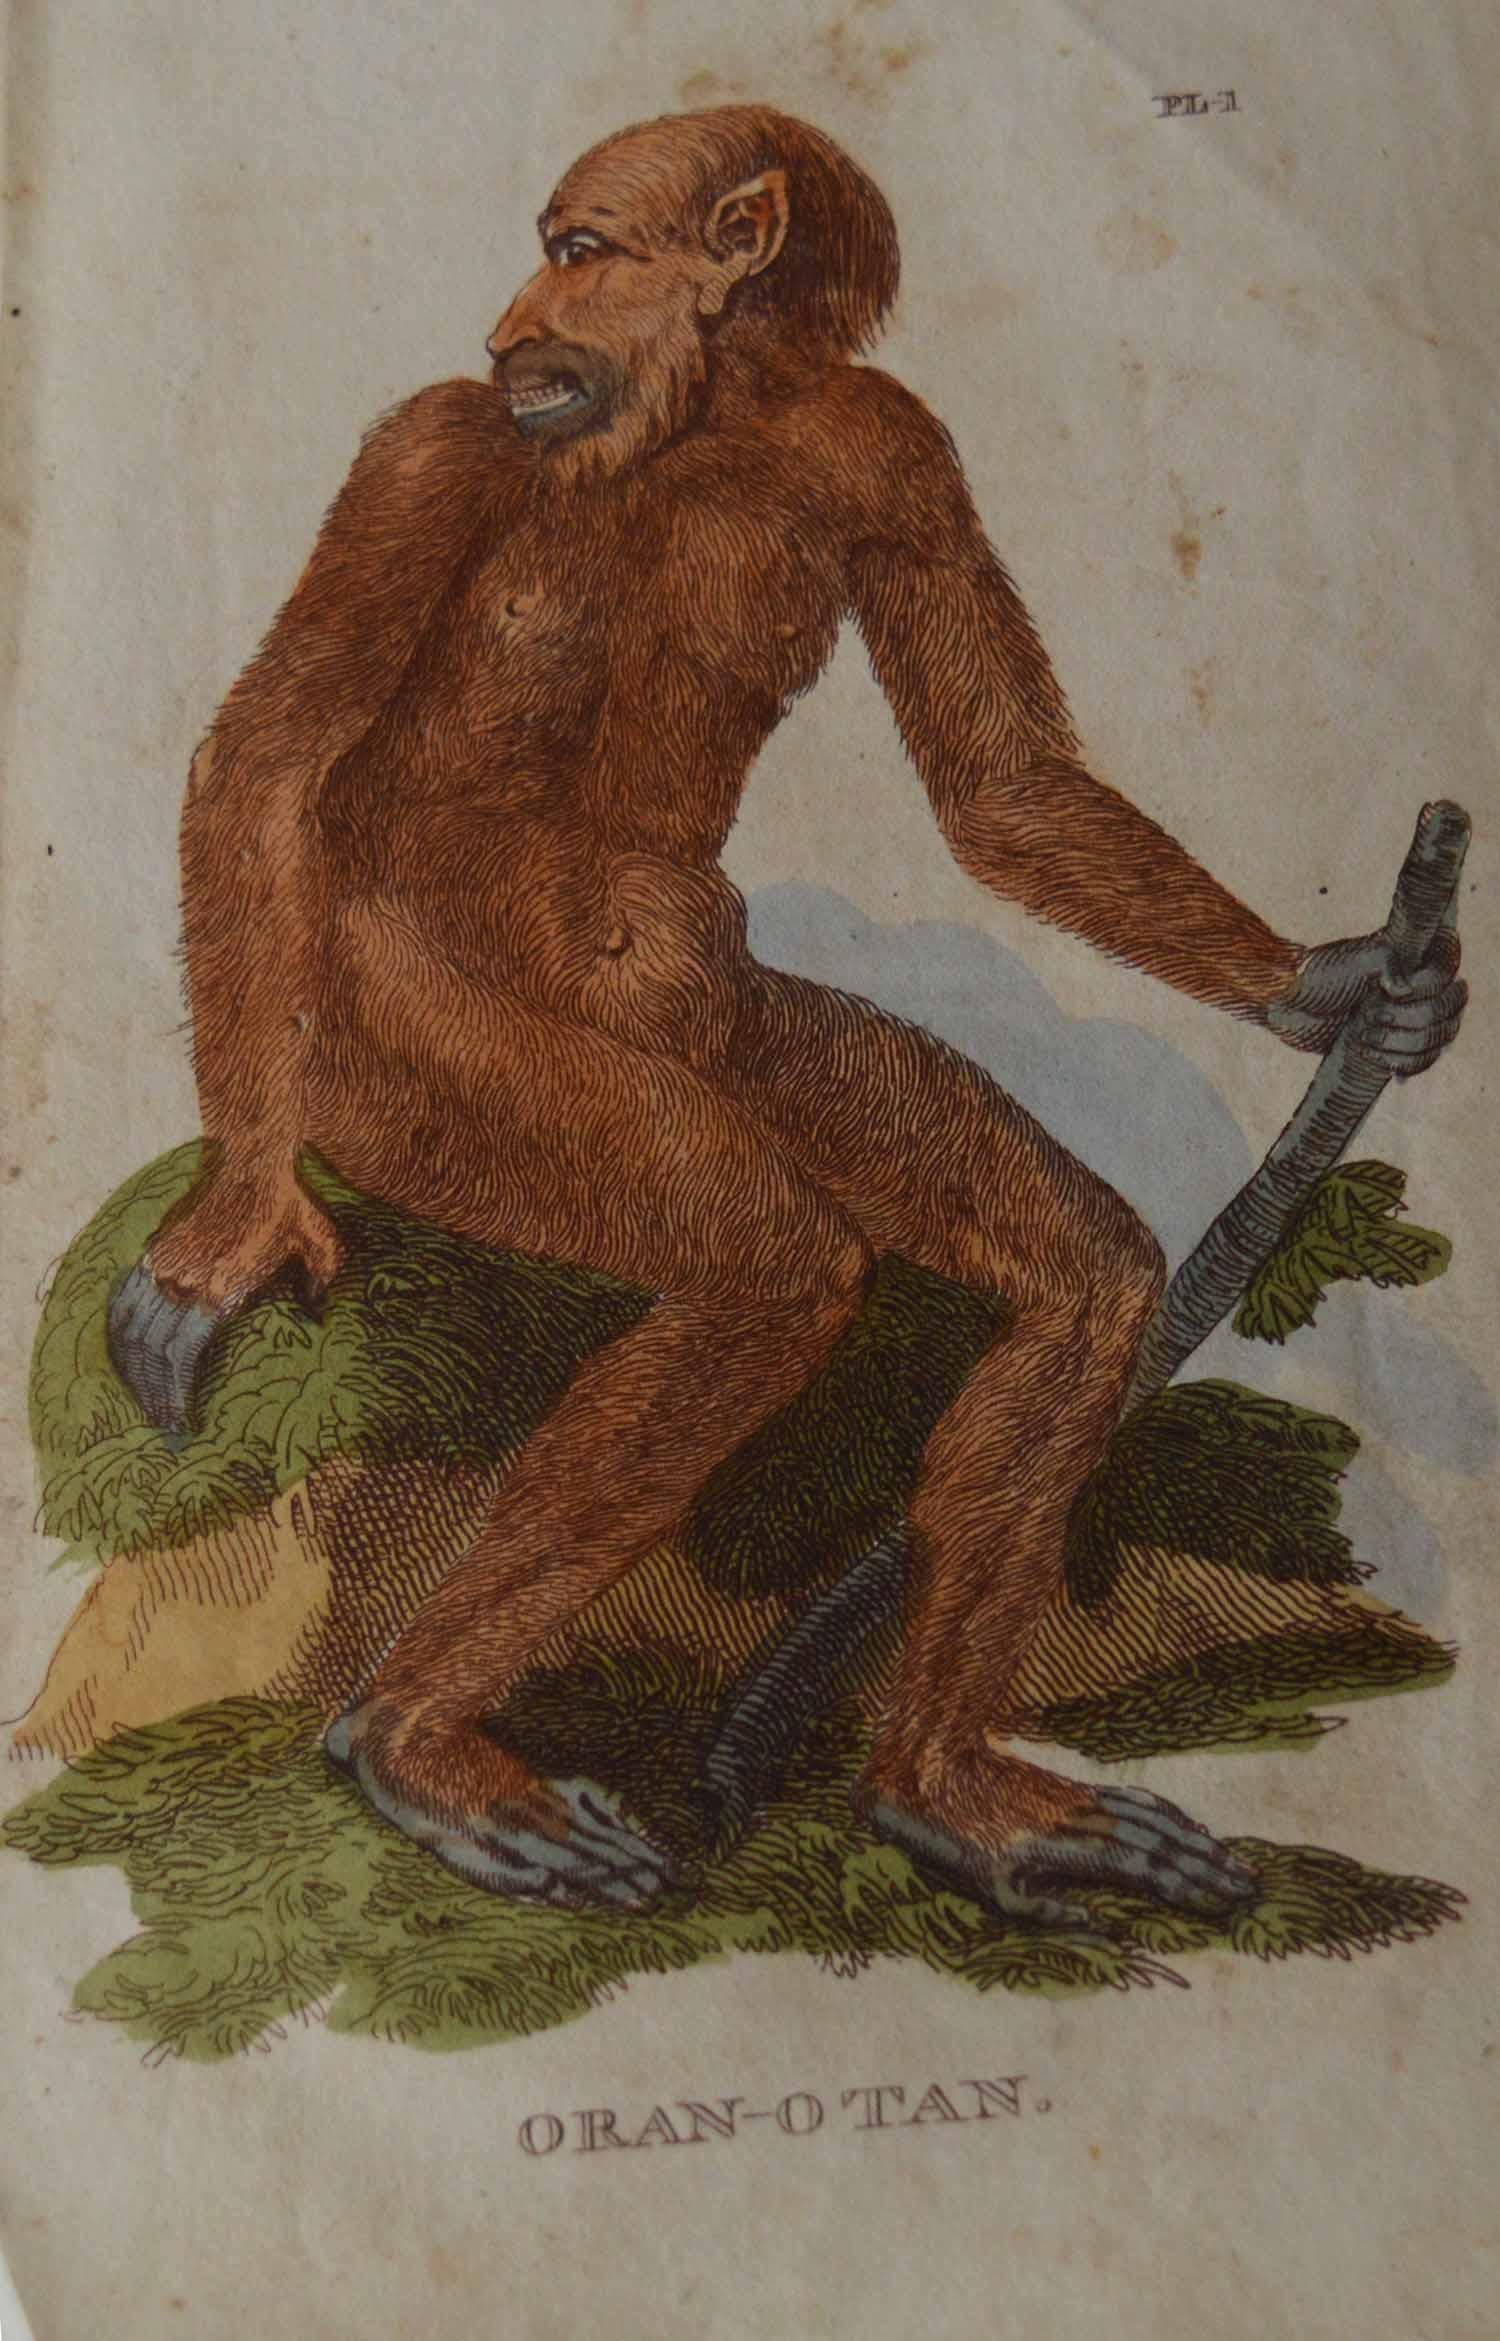 Other Set of 15 Original Antique Prints of Monkey's, circa 1810